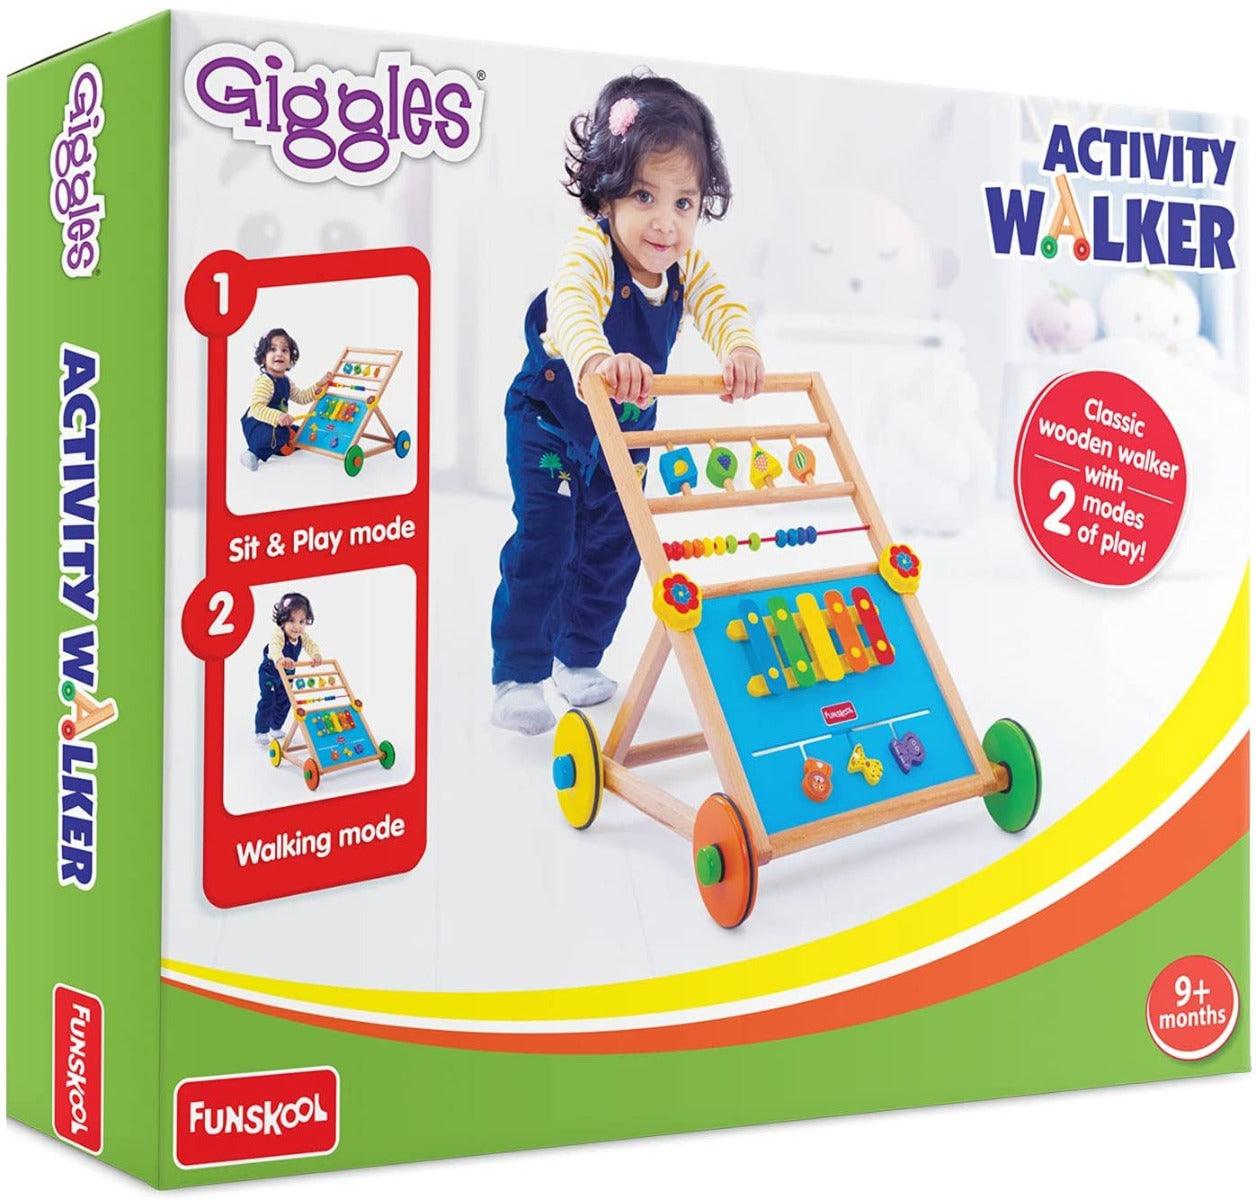 Giggles Activity Walker
| Sam's toy | Funskool - samstoy.in